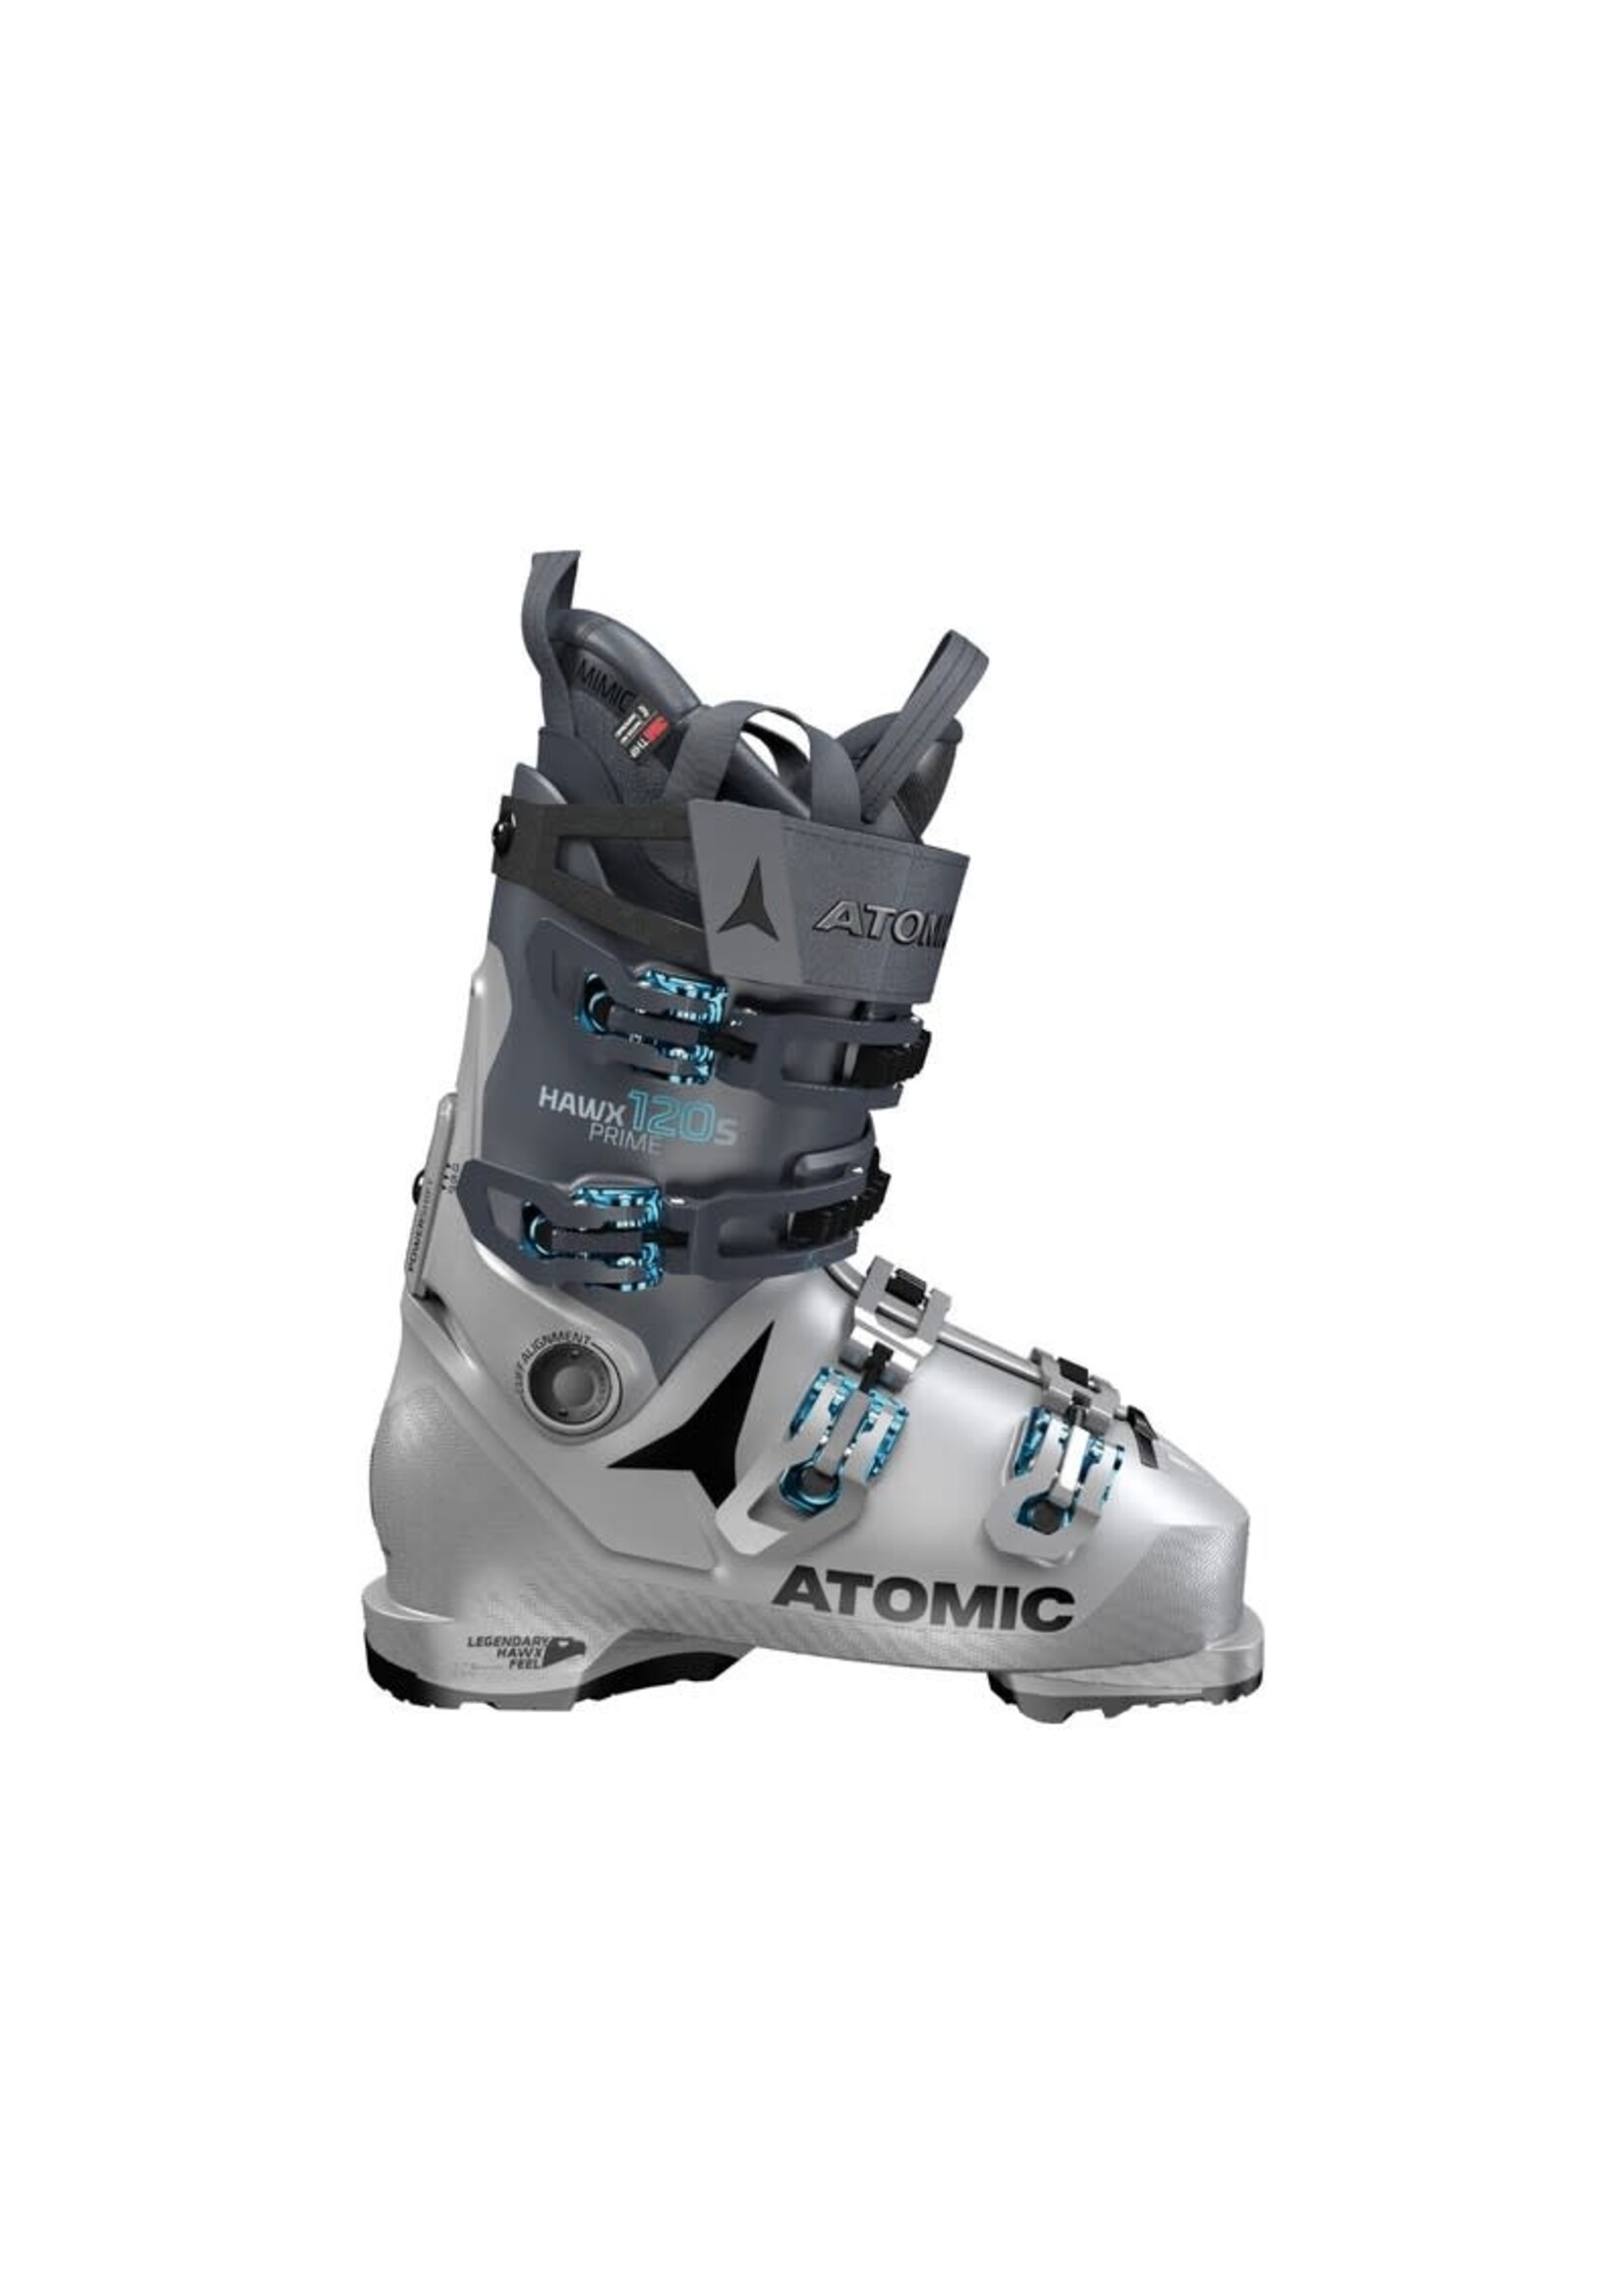 Atomic Ski Boot Alpine Hawx Prime 120 S